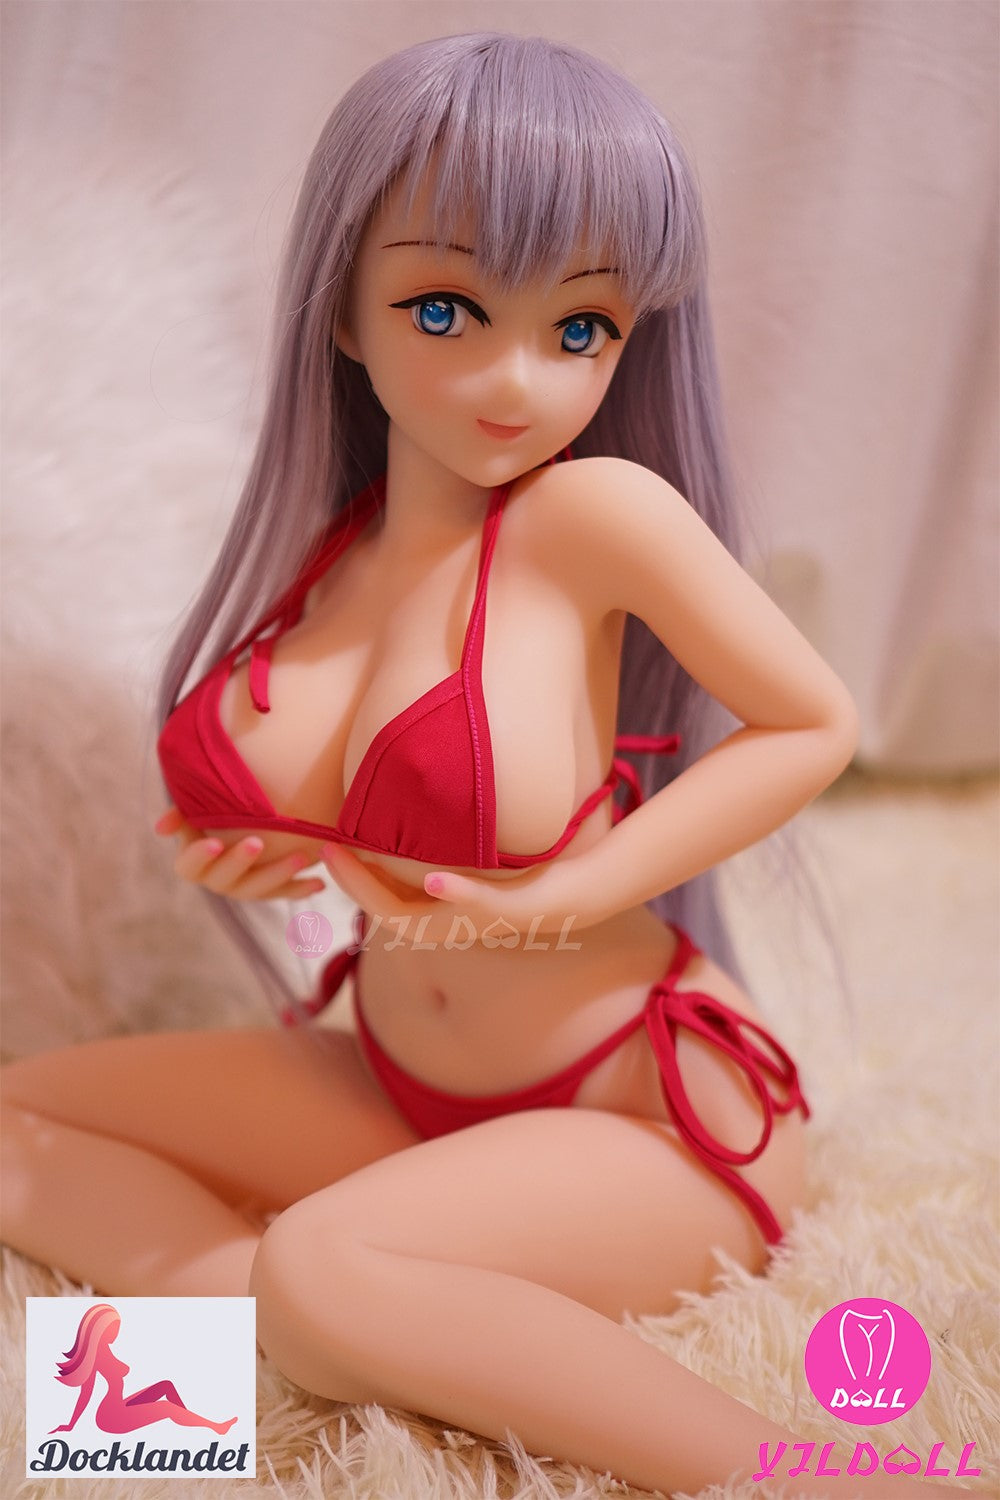 Aya Ne Sexdocka (YJL Doll 80cm E-Kupa #005 Silikon)